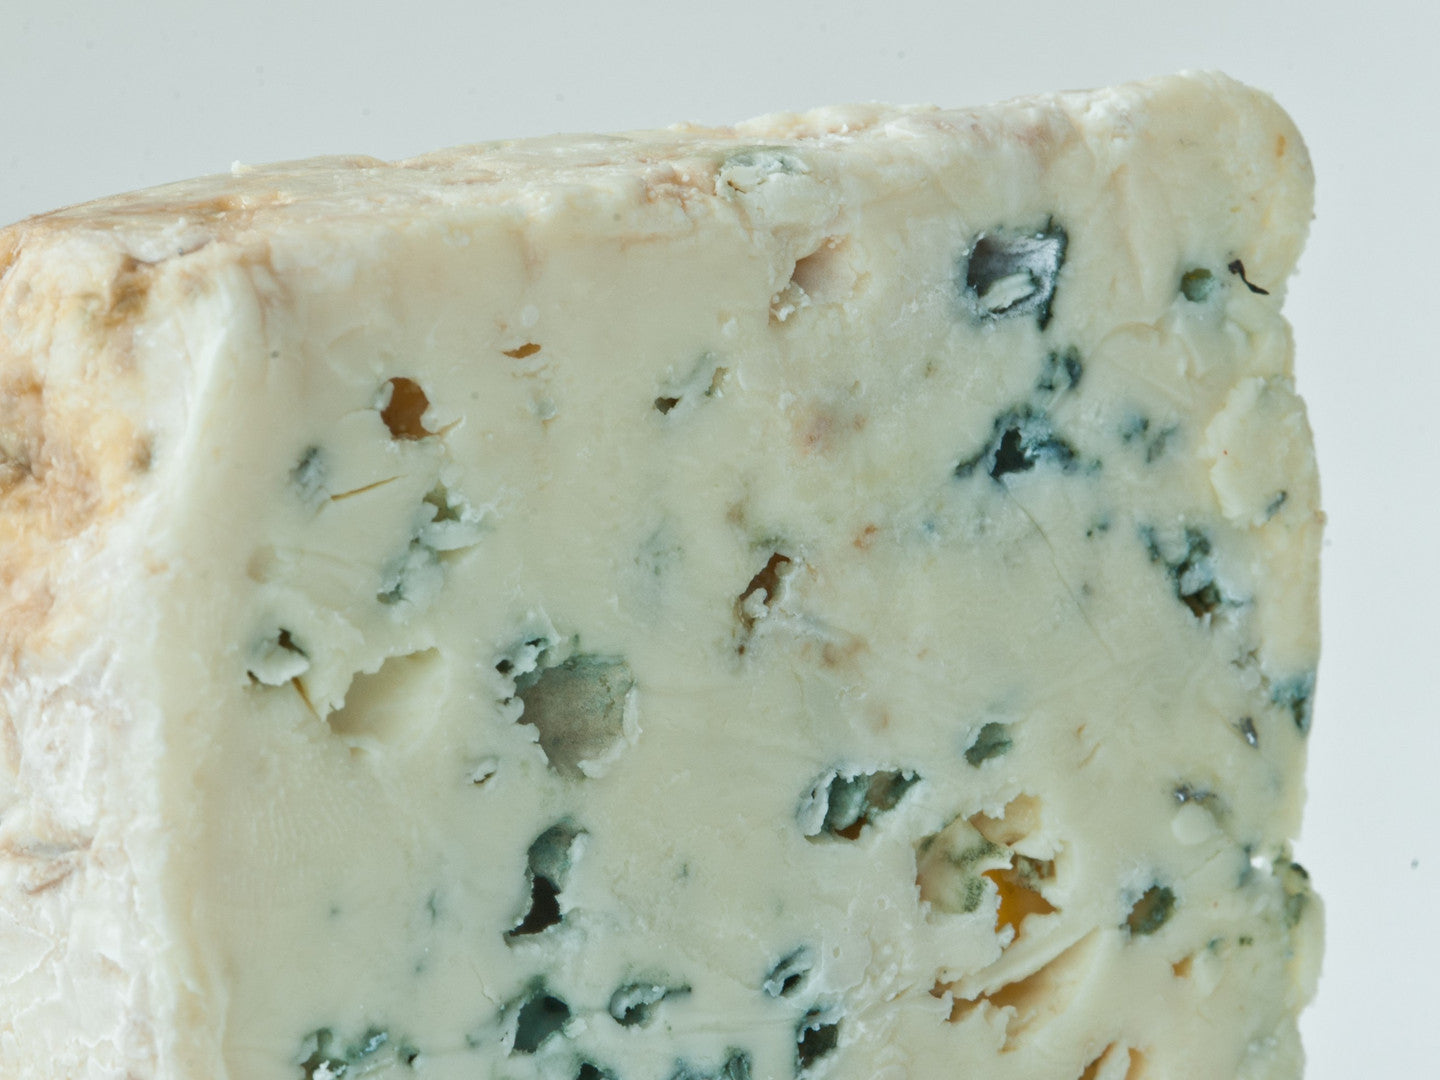 Parmigiano Reggiano DOP – St. James Cheese Company